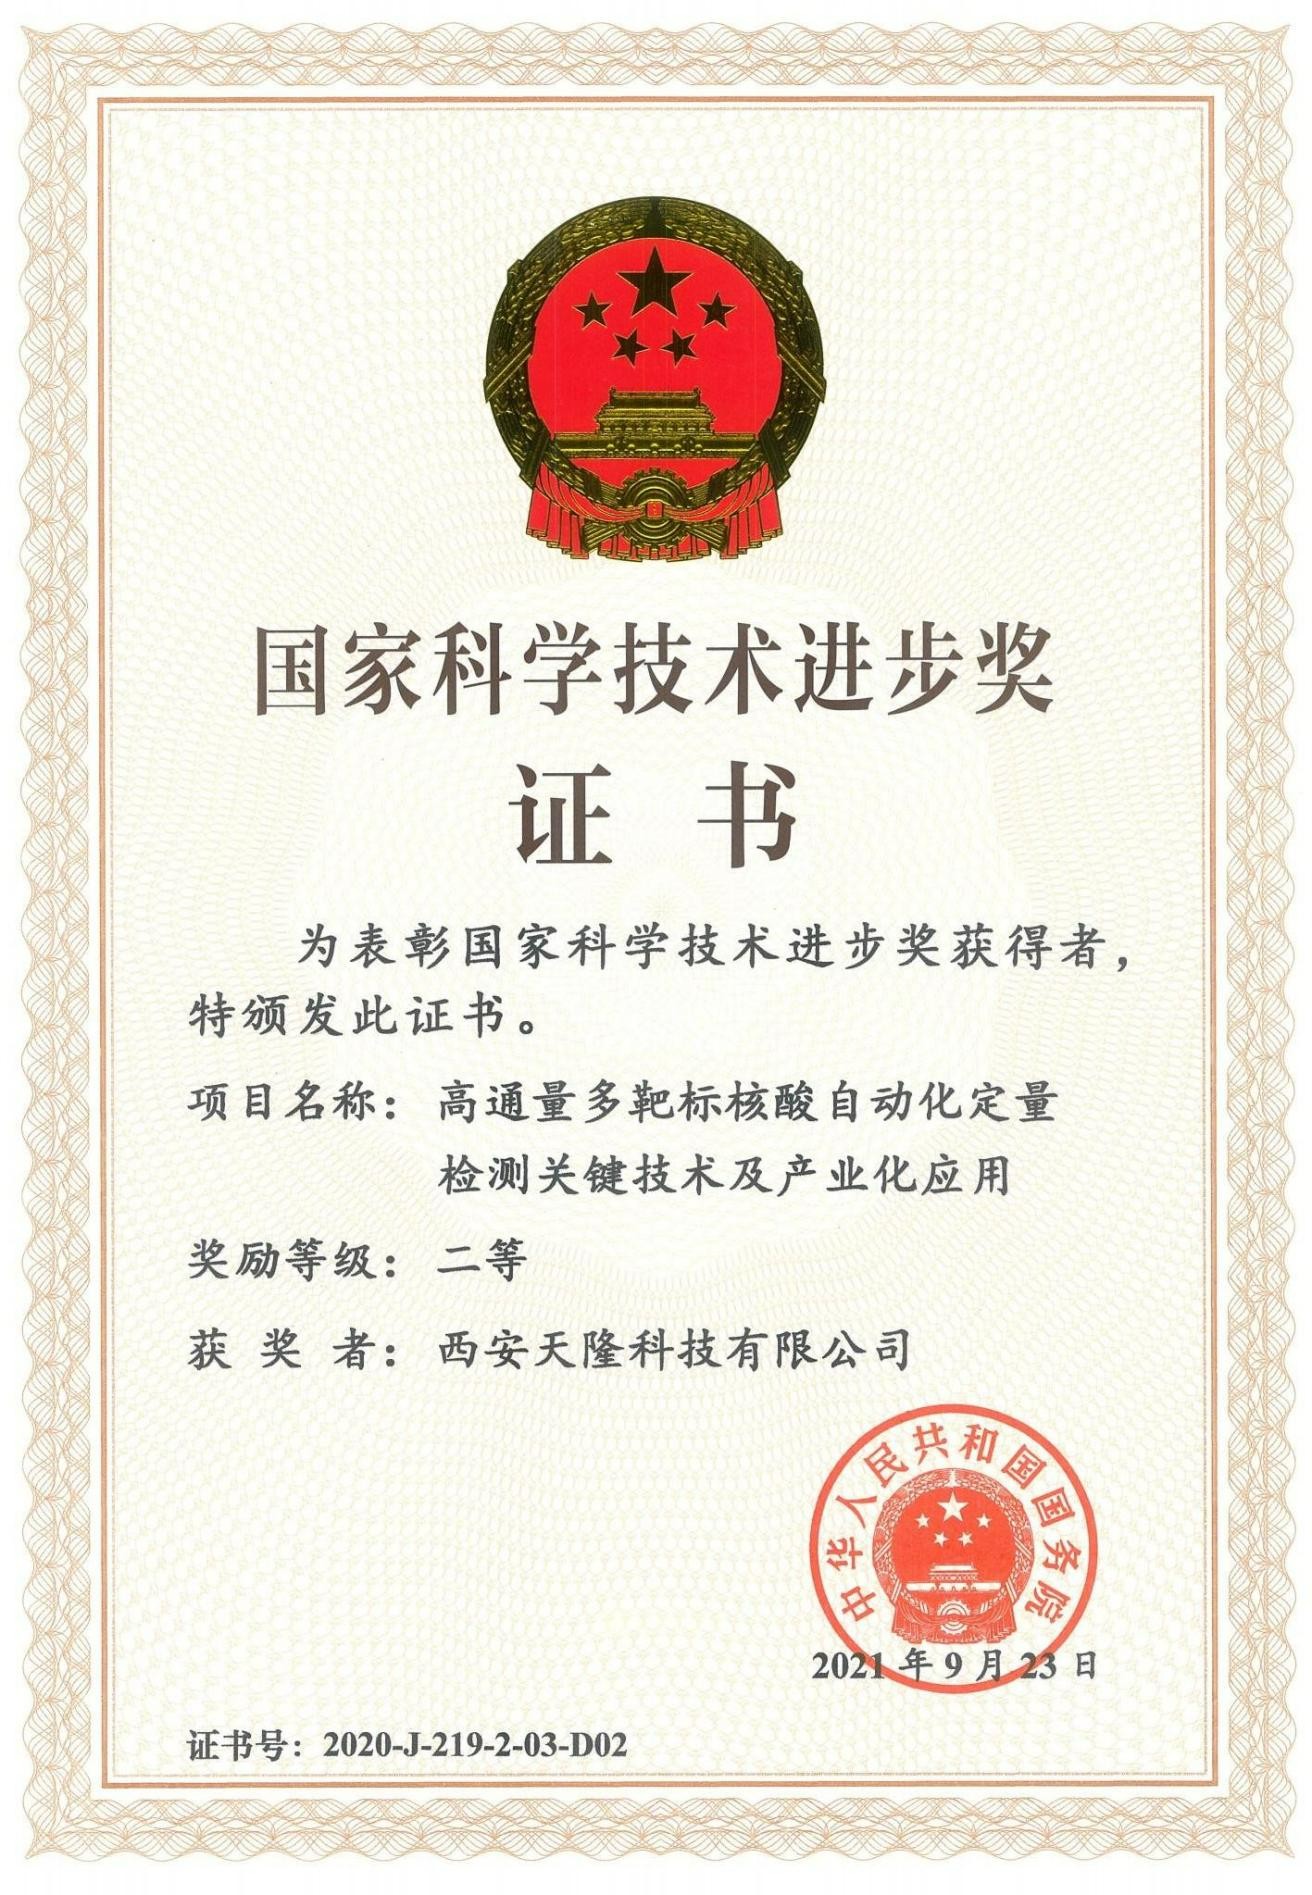 China's National Science and Technology Progress Award(Xi'an Tianlong)